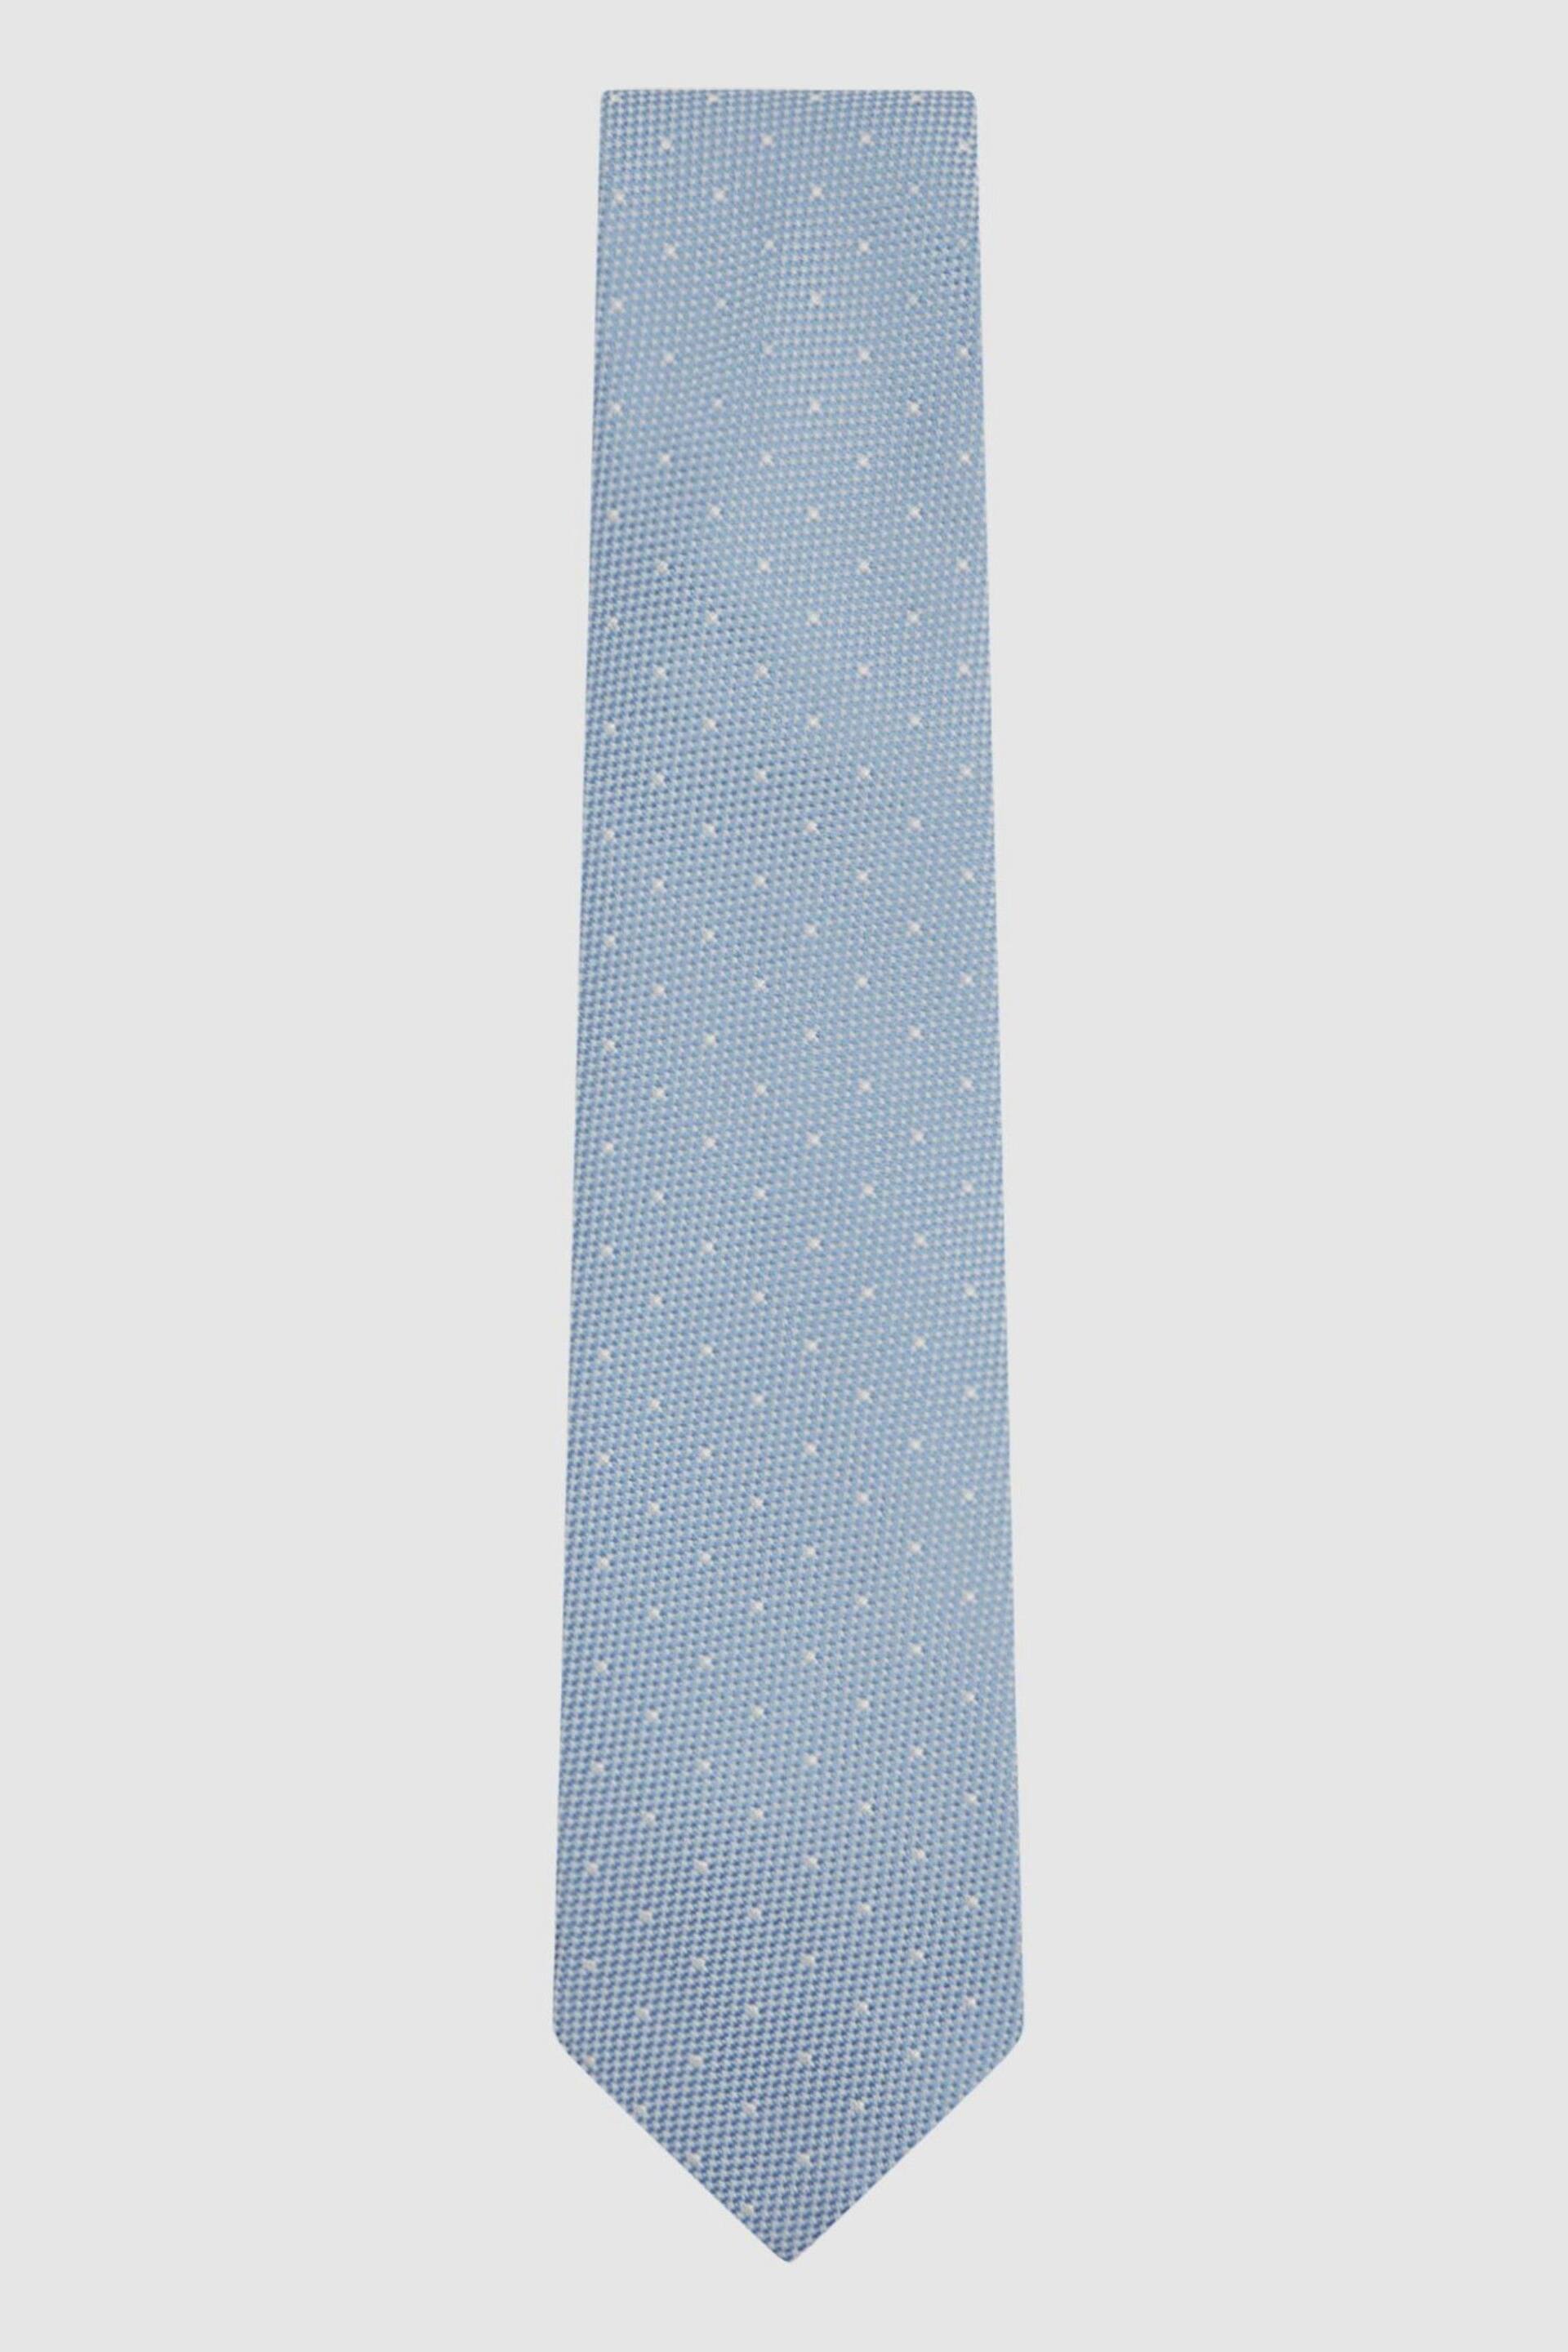 Reiss Soft Blue Liam Silk Polka Dot Tie - Image 1 of 5